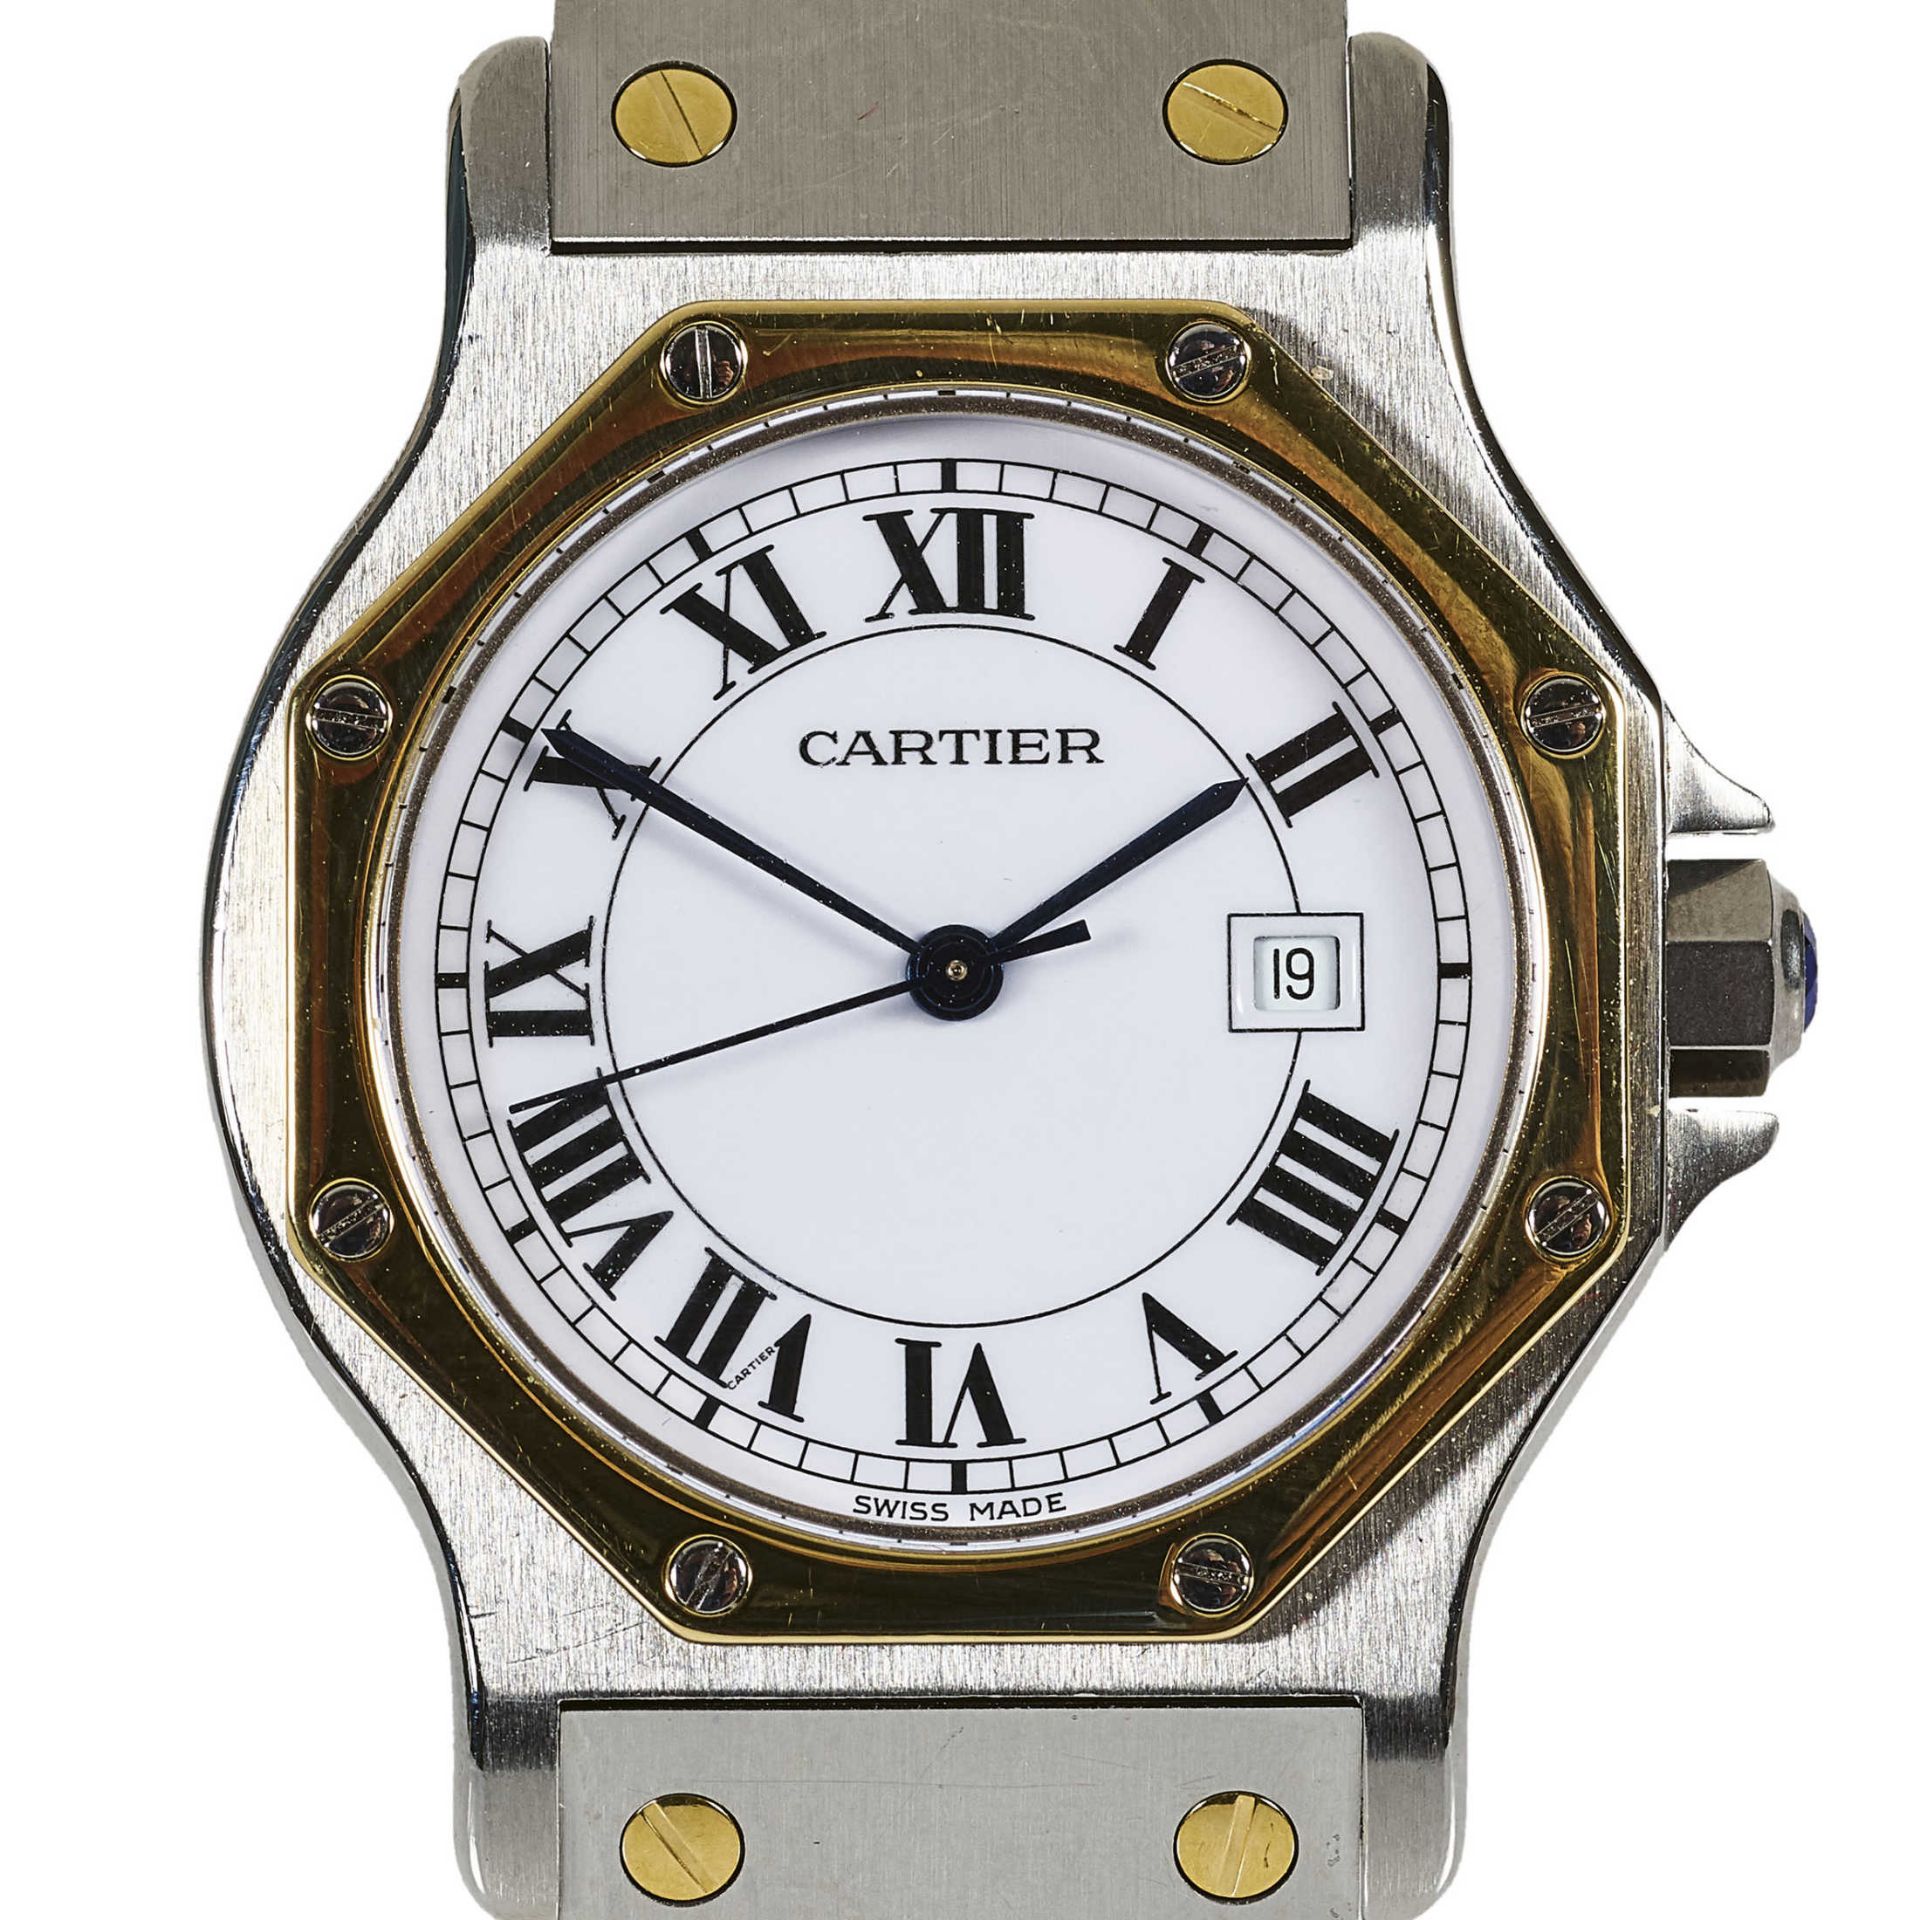 CARTIERWristwatch "Santos".Manufacturer/Manufaktur: Cartier, Paris. Model: "Santos". Year/Jahr: